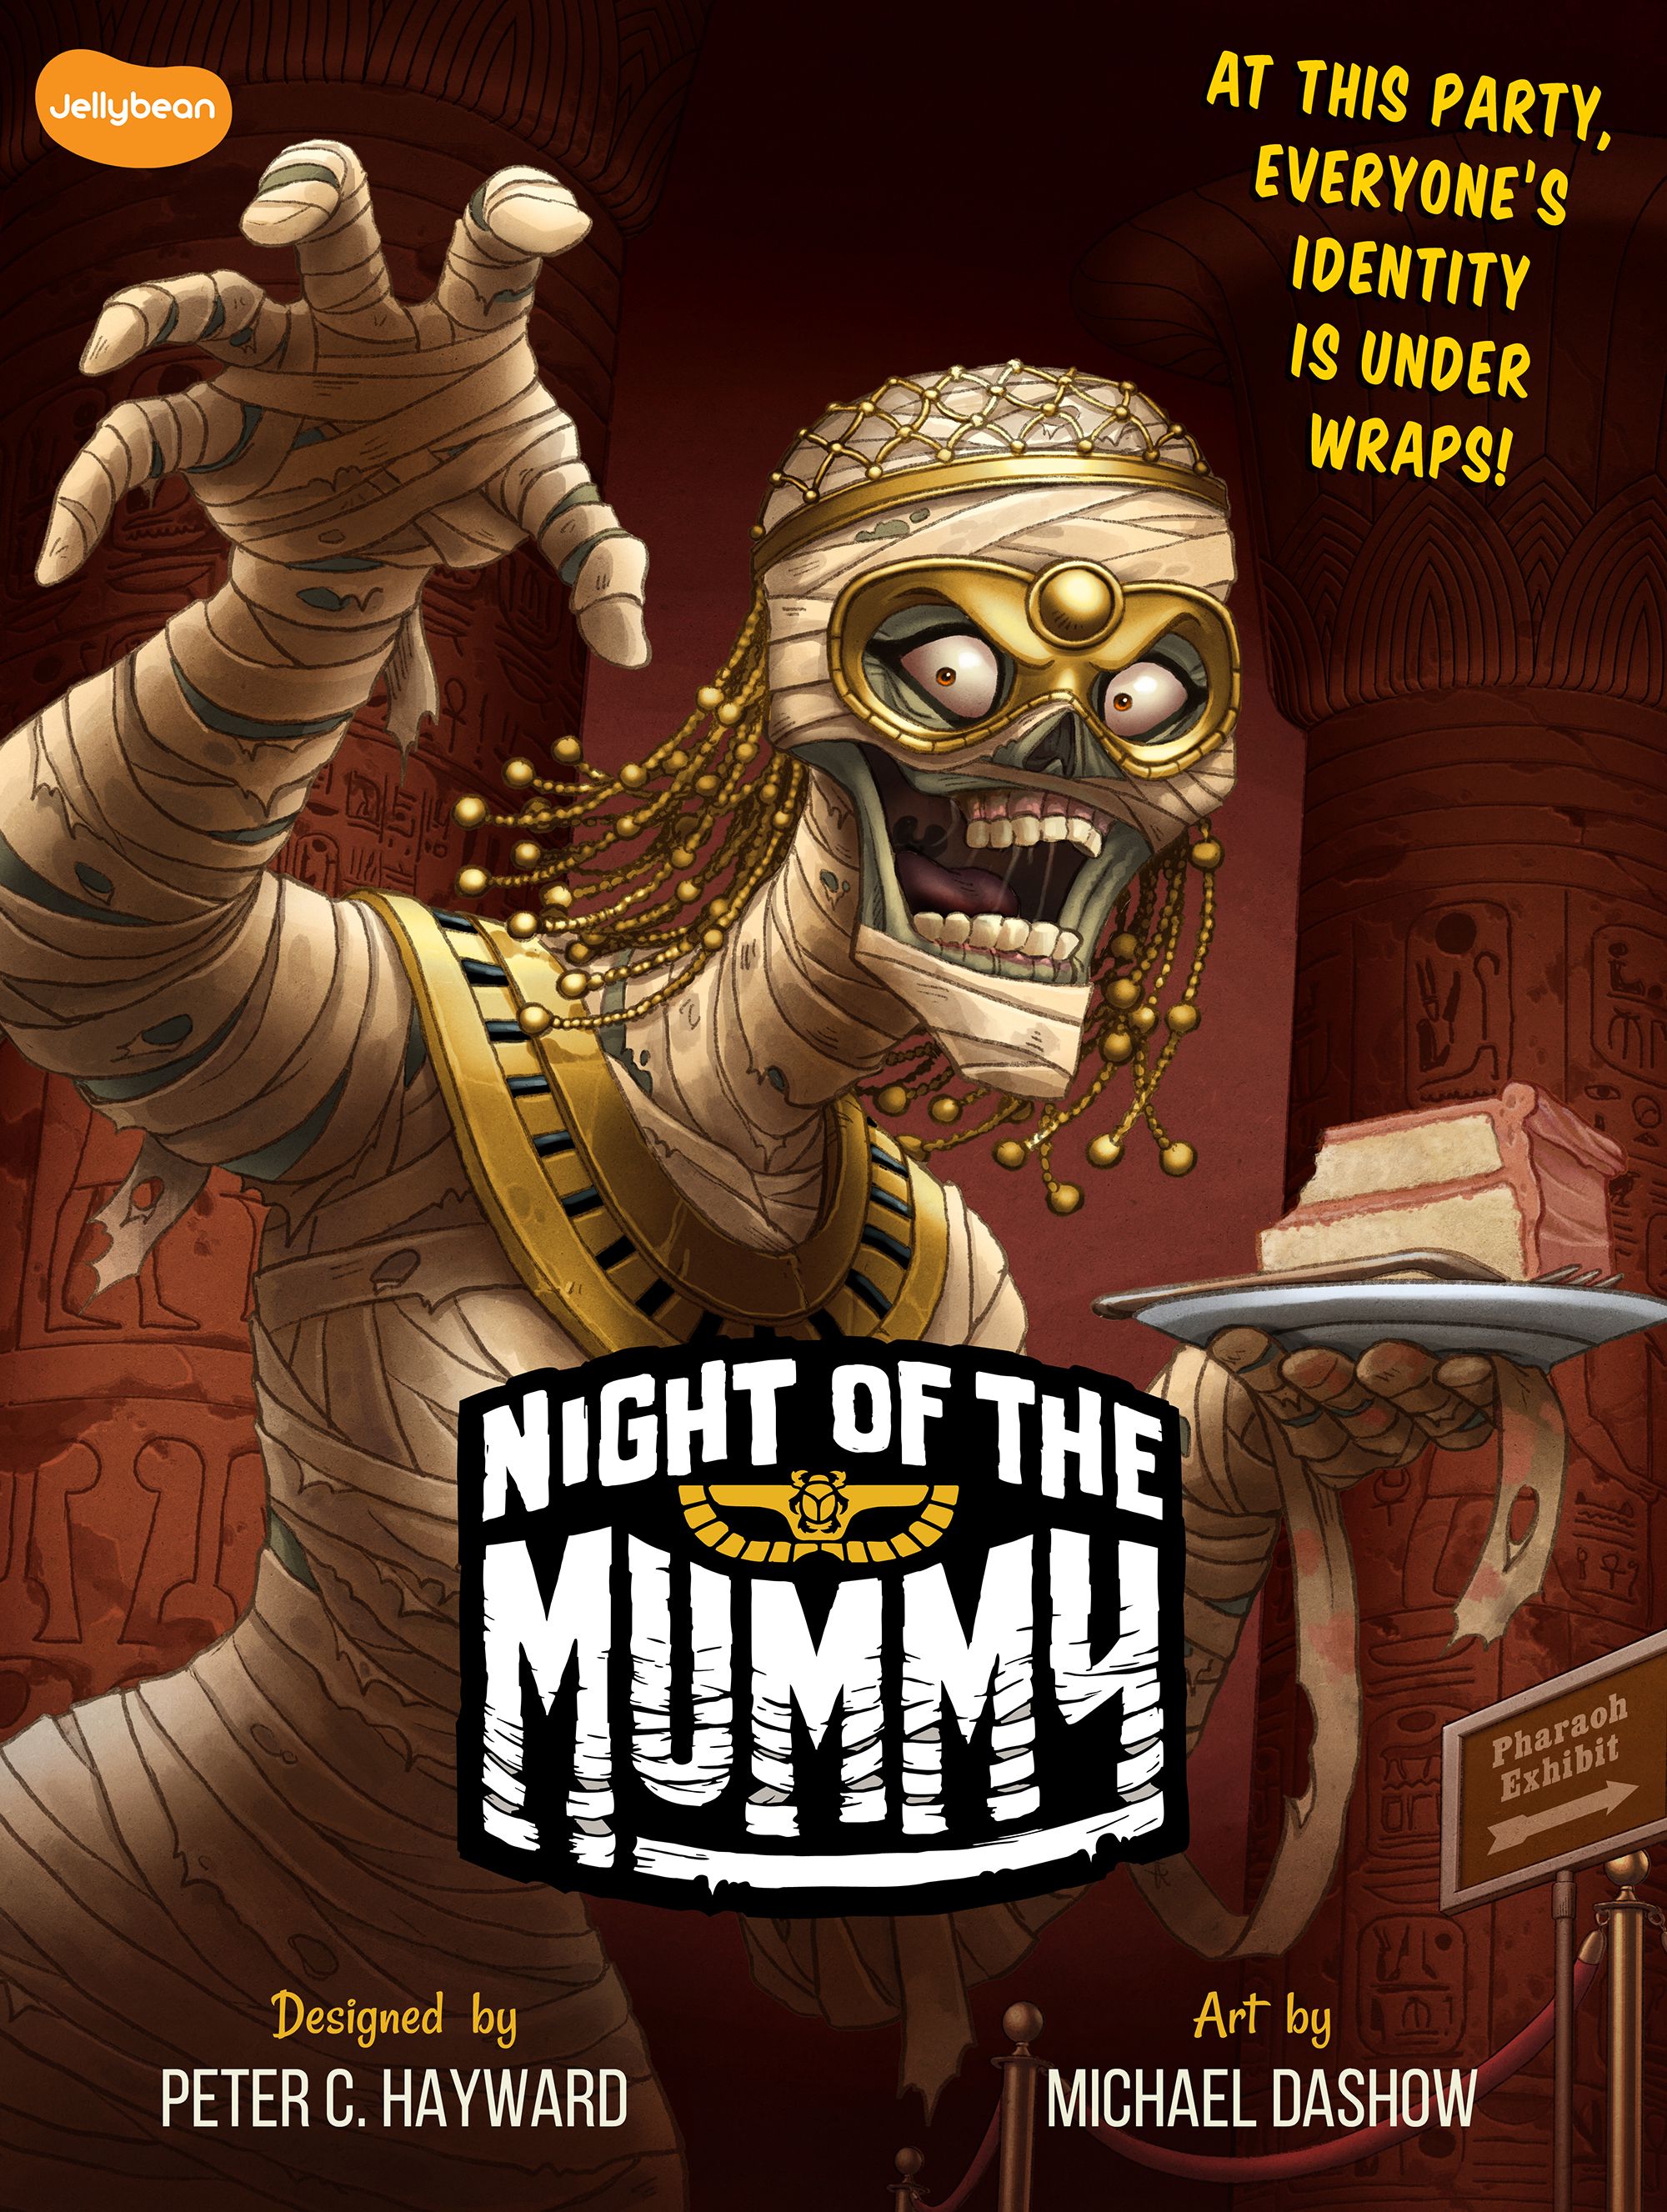 Night of the Mummy